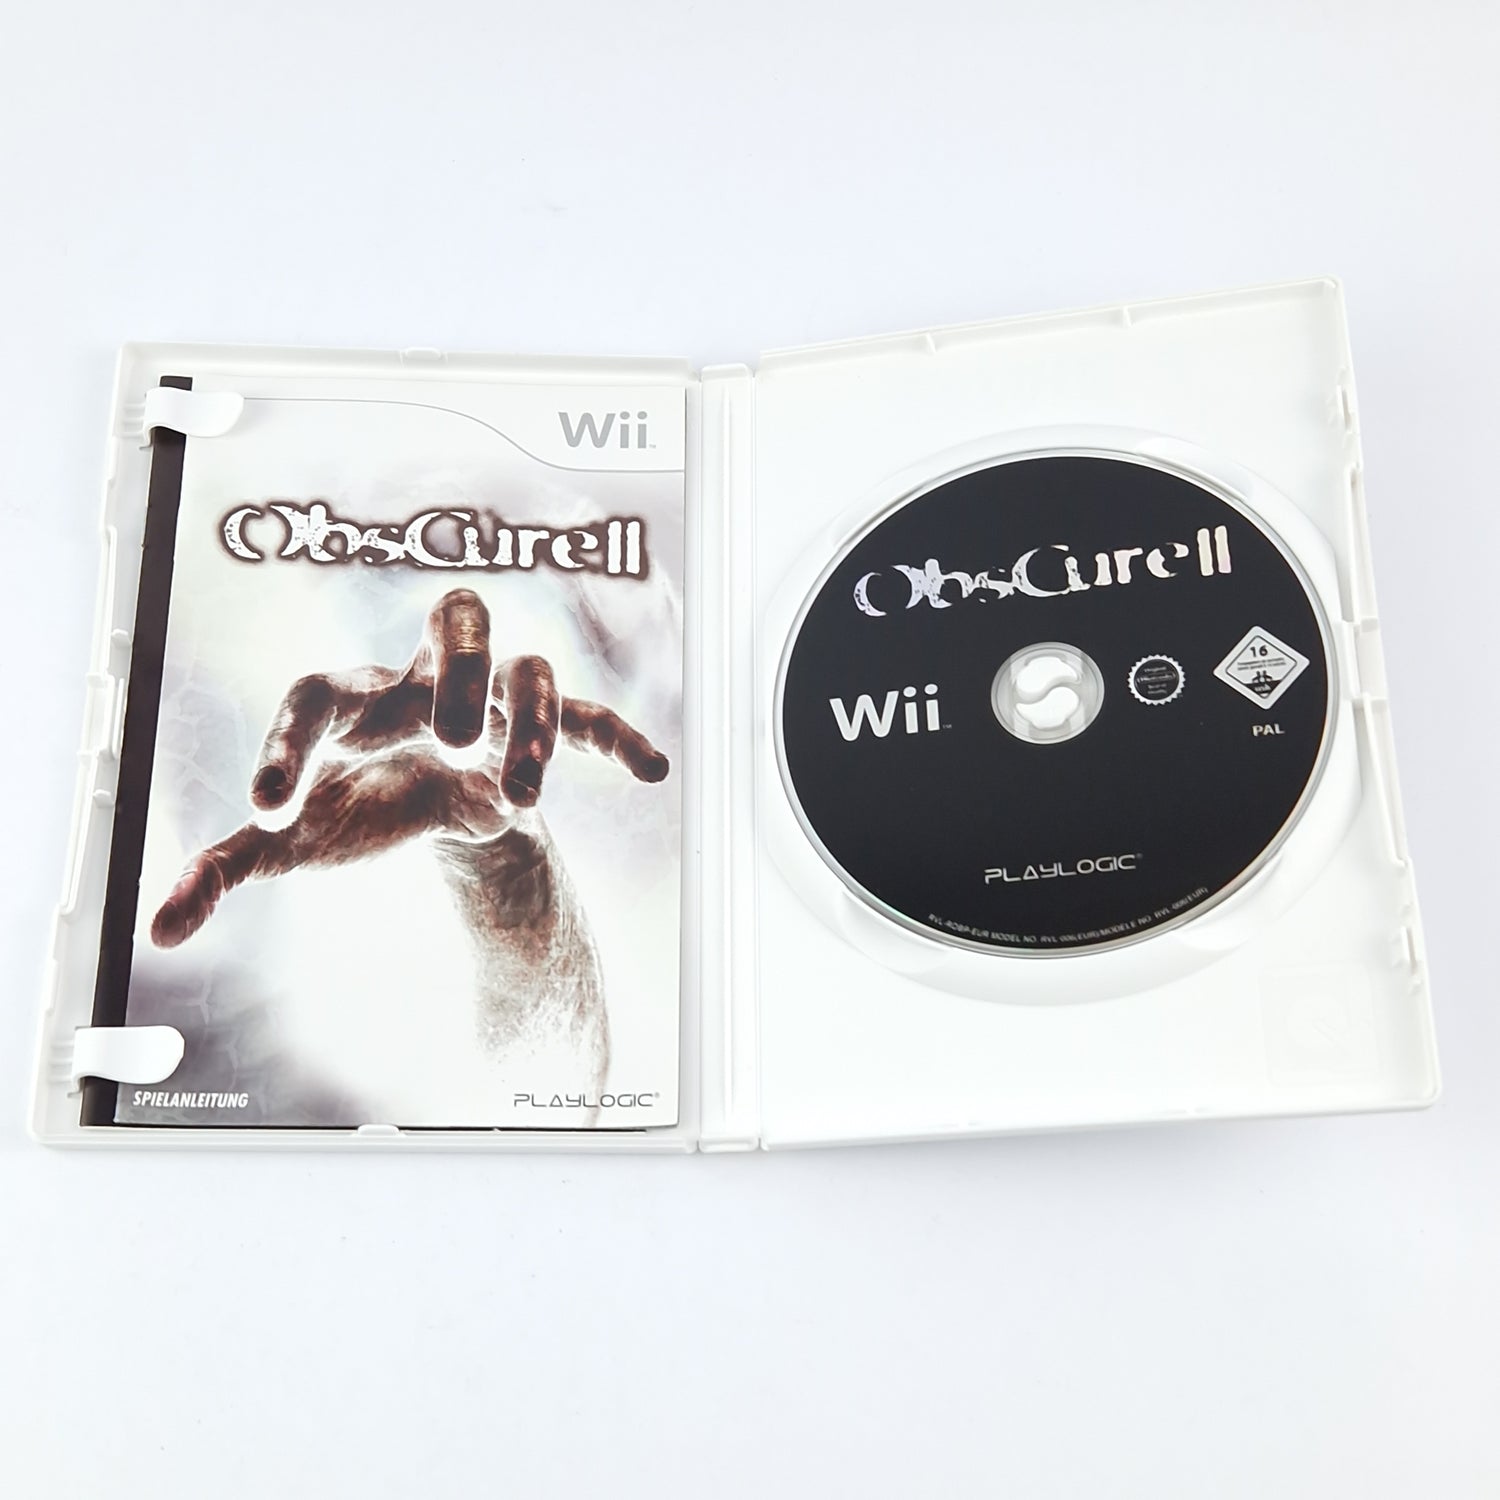 Nintendo Wii Spiel : Obscure II 2 - OVP Anleitung CD Pal Disk